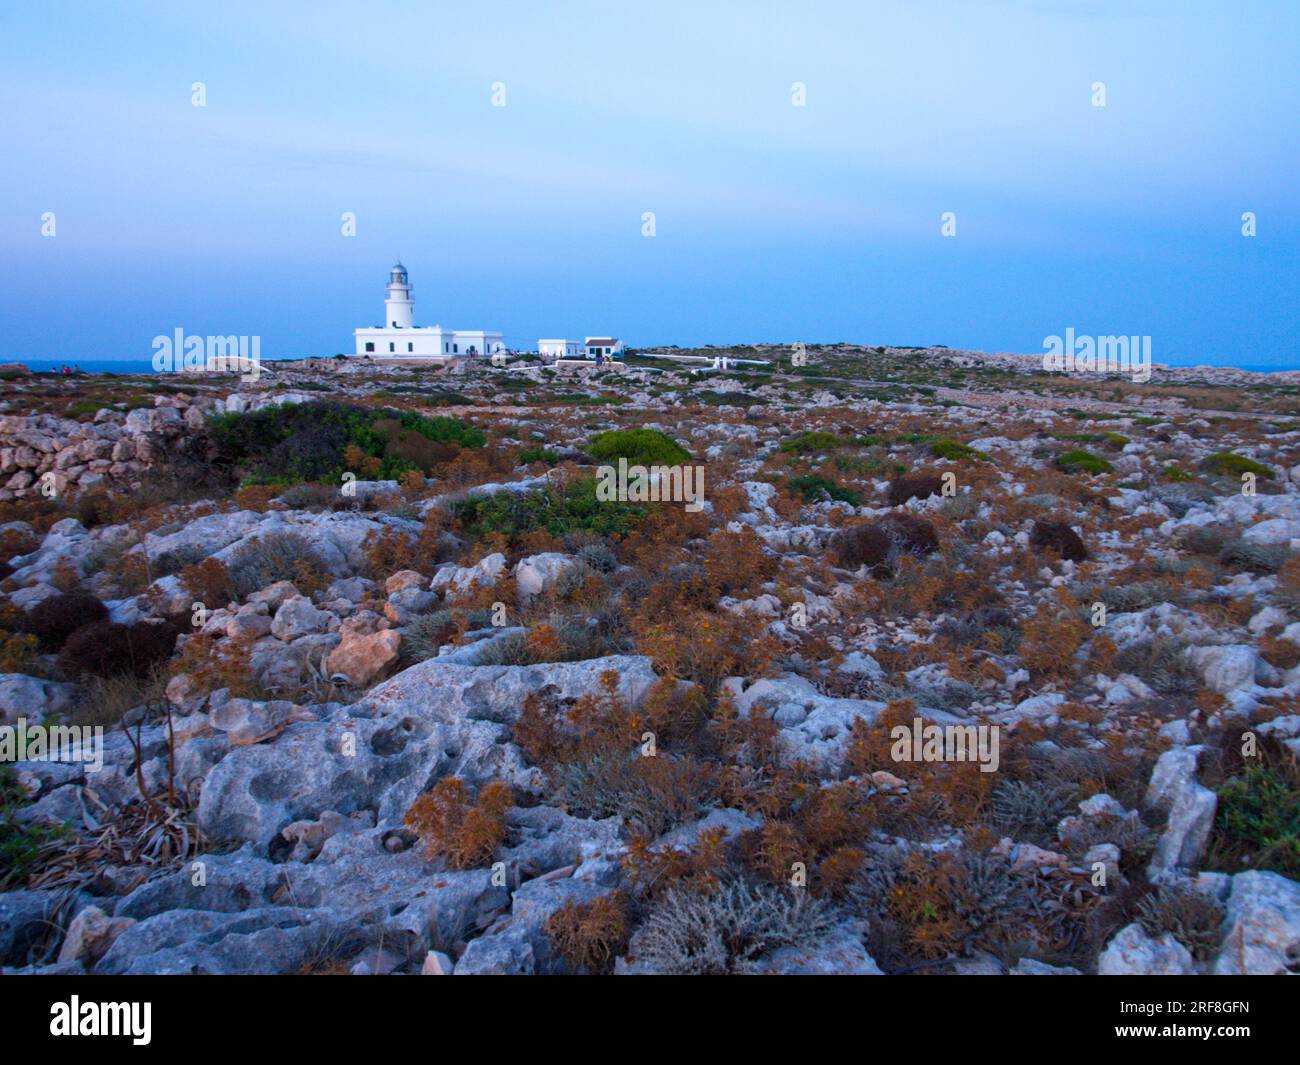 A lighthouse on the Island of Menorca surrounded by stony ground.  Un faro de la Isla de Menorca  rodeado de un terreno pedregoso. Stock Photo